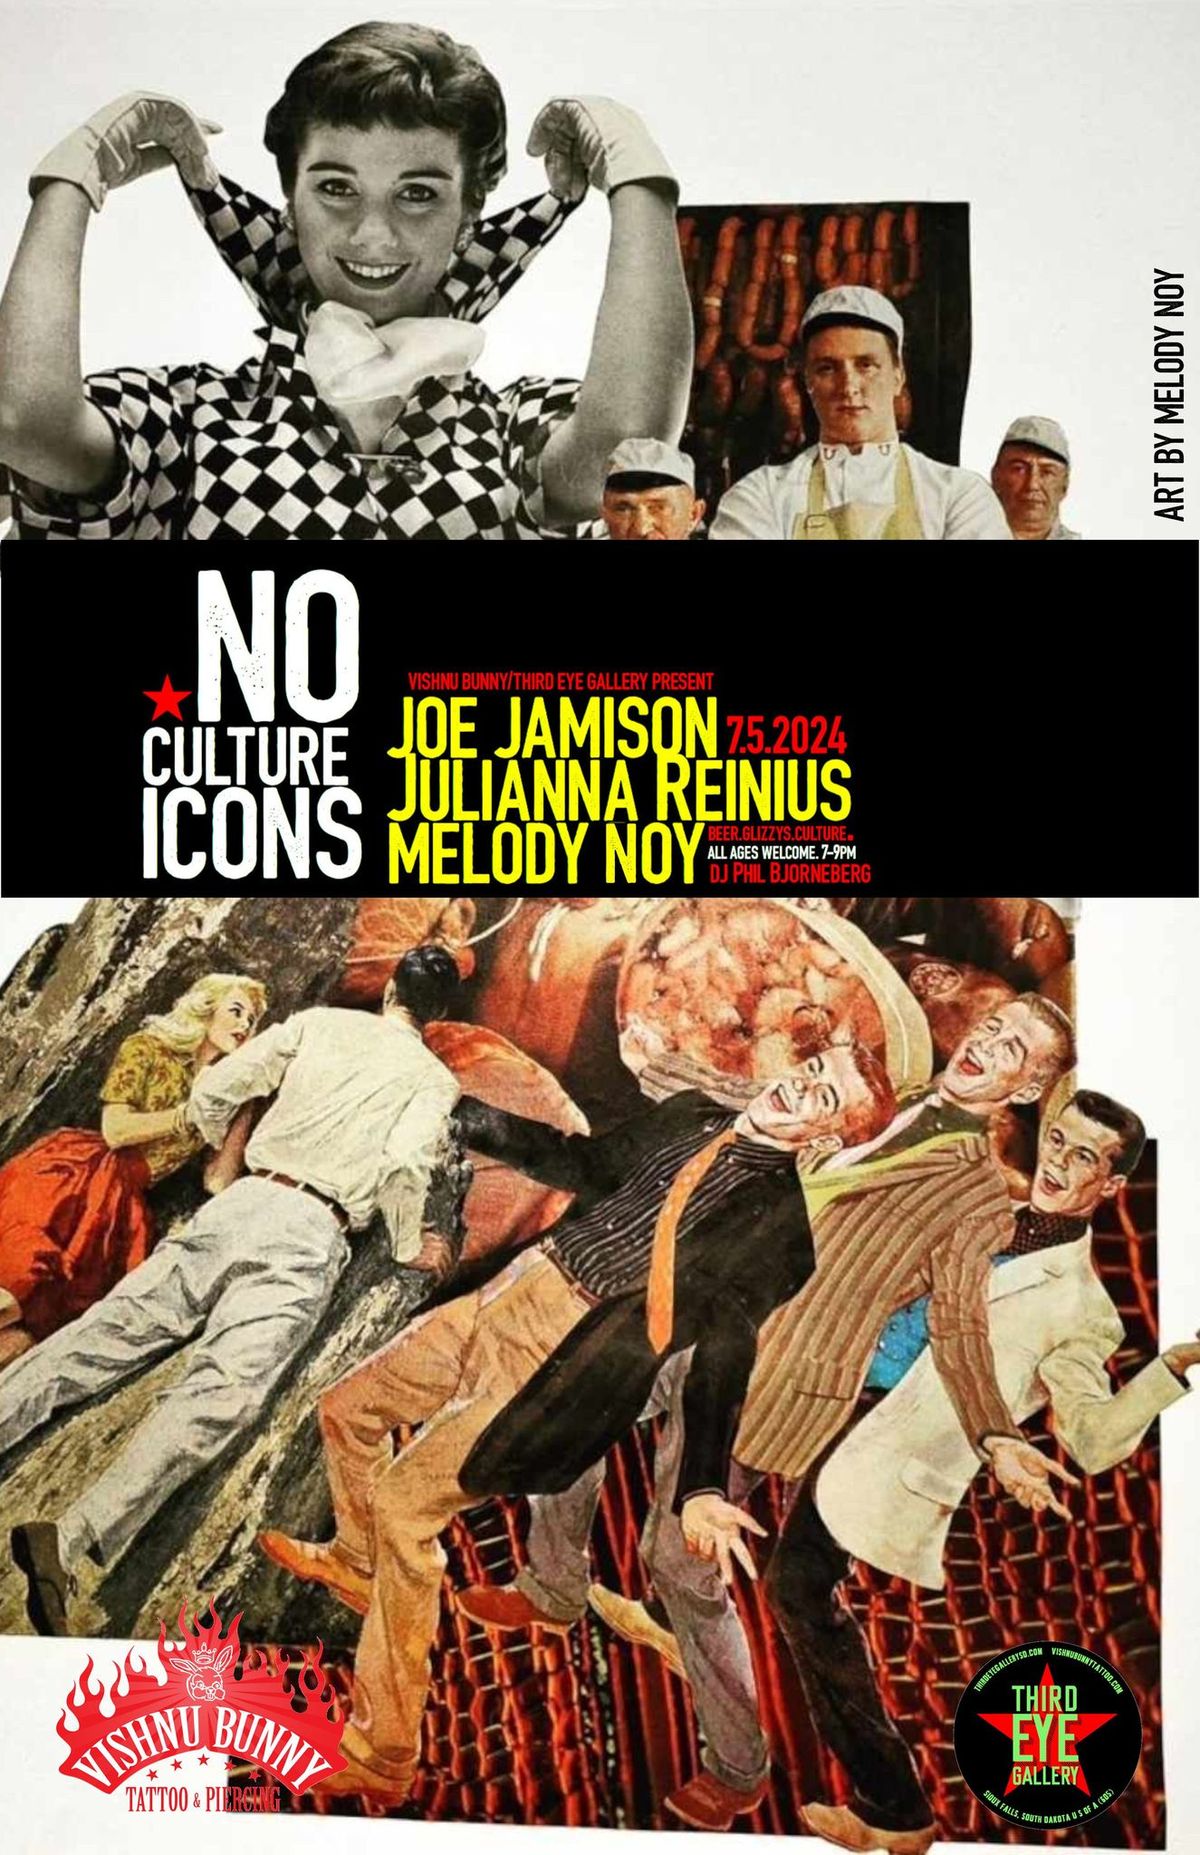 NO CULTURE ICONS - The Art of Joe Jamison, Melody Noy & Julianna Reninius